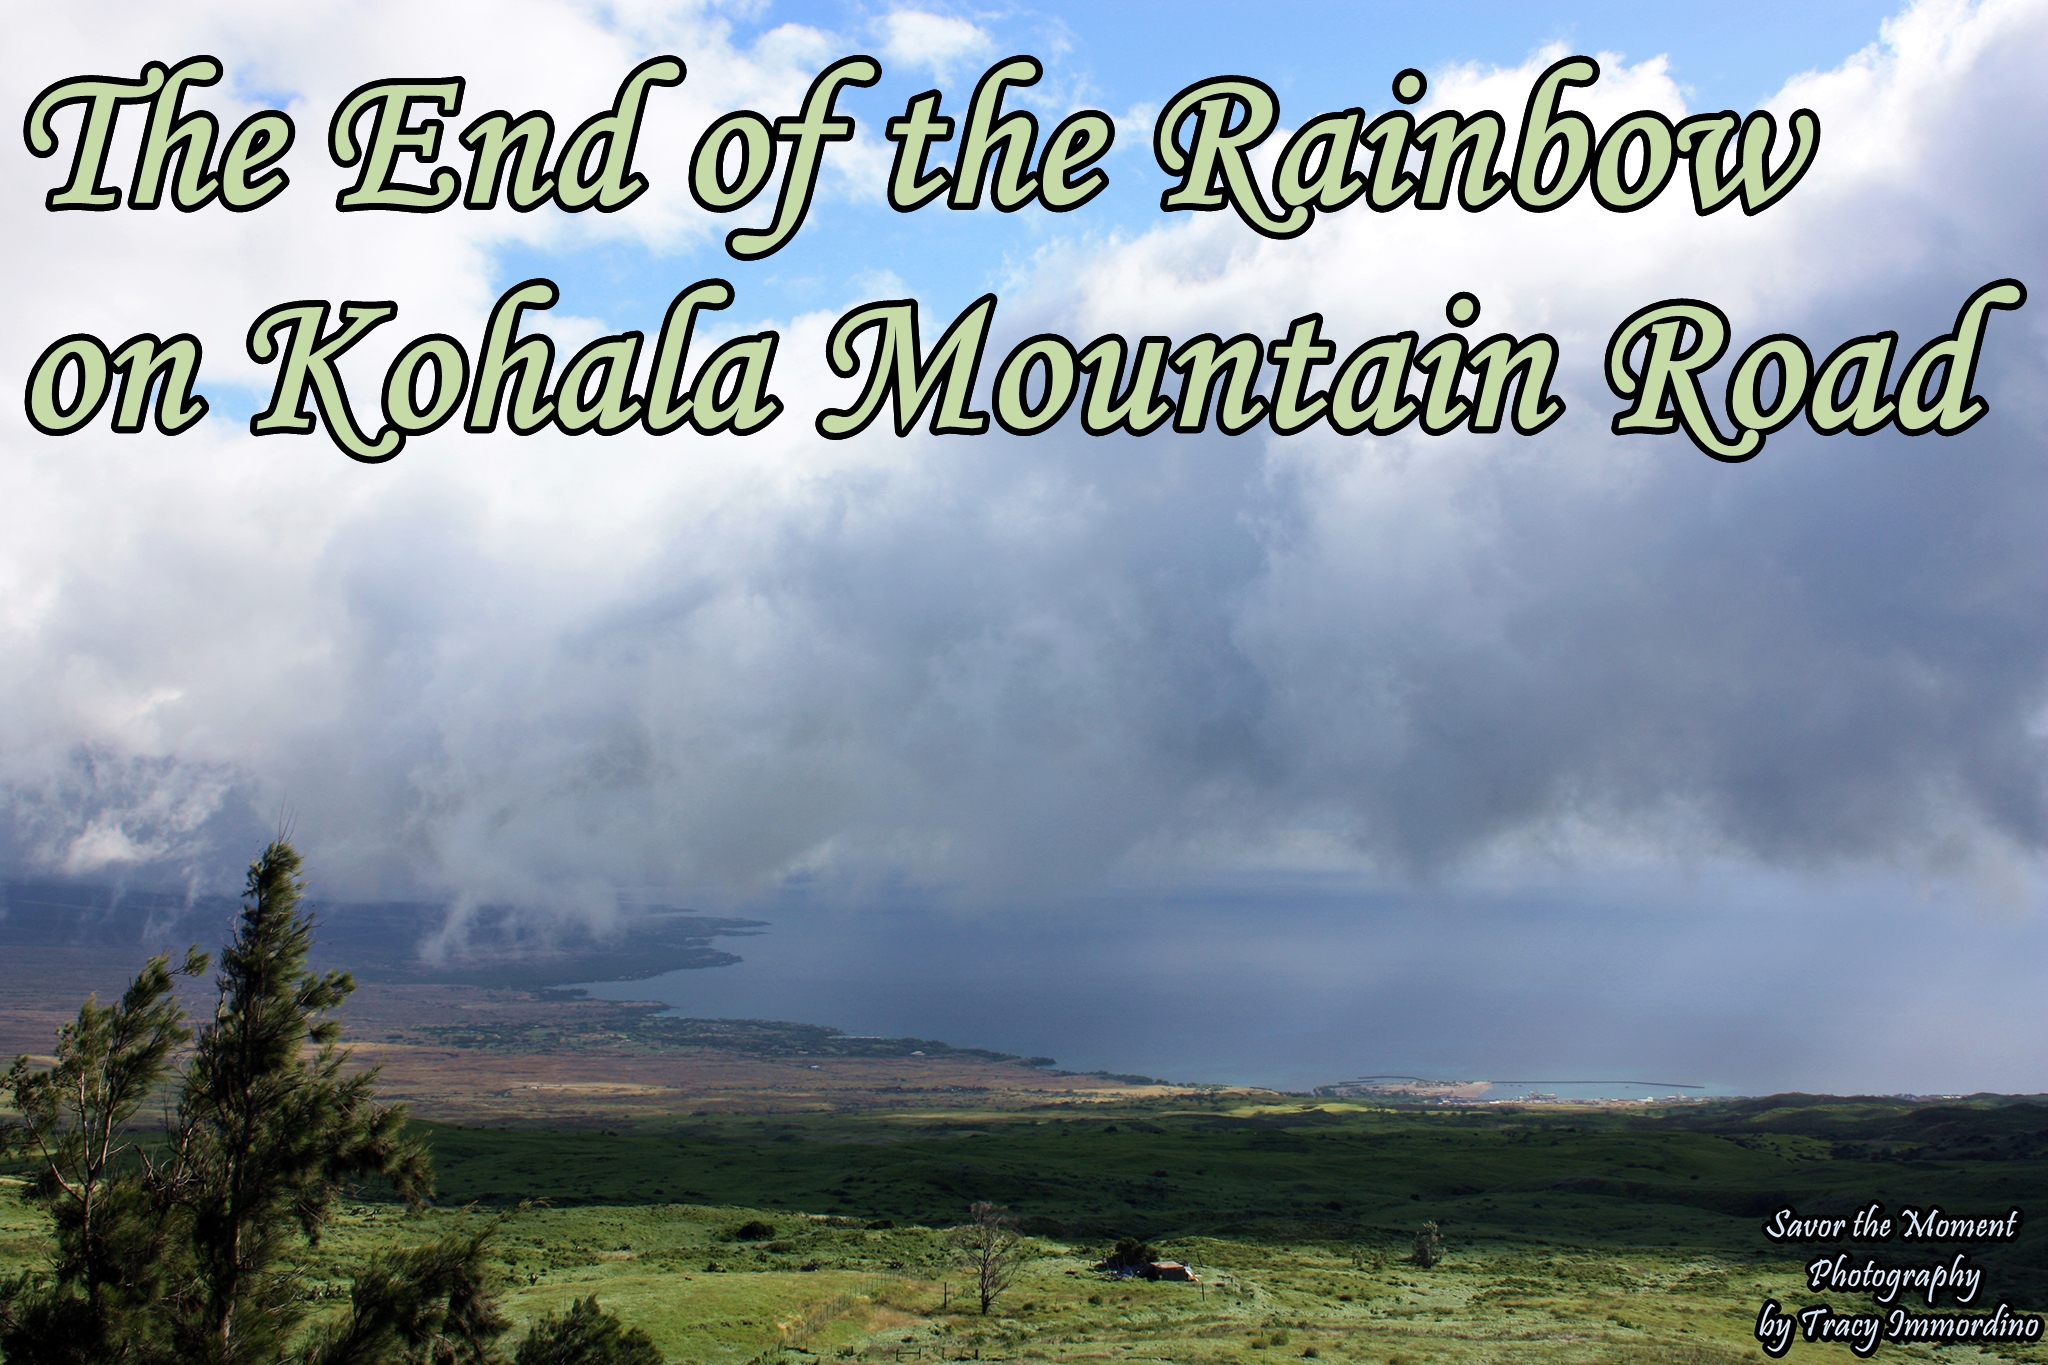 The End of the Rainbow on Kohala Mountain Road